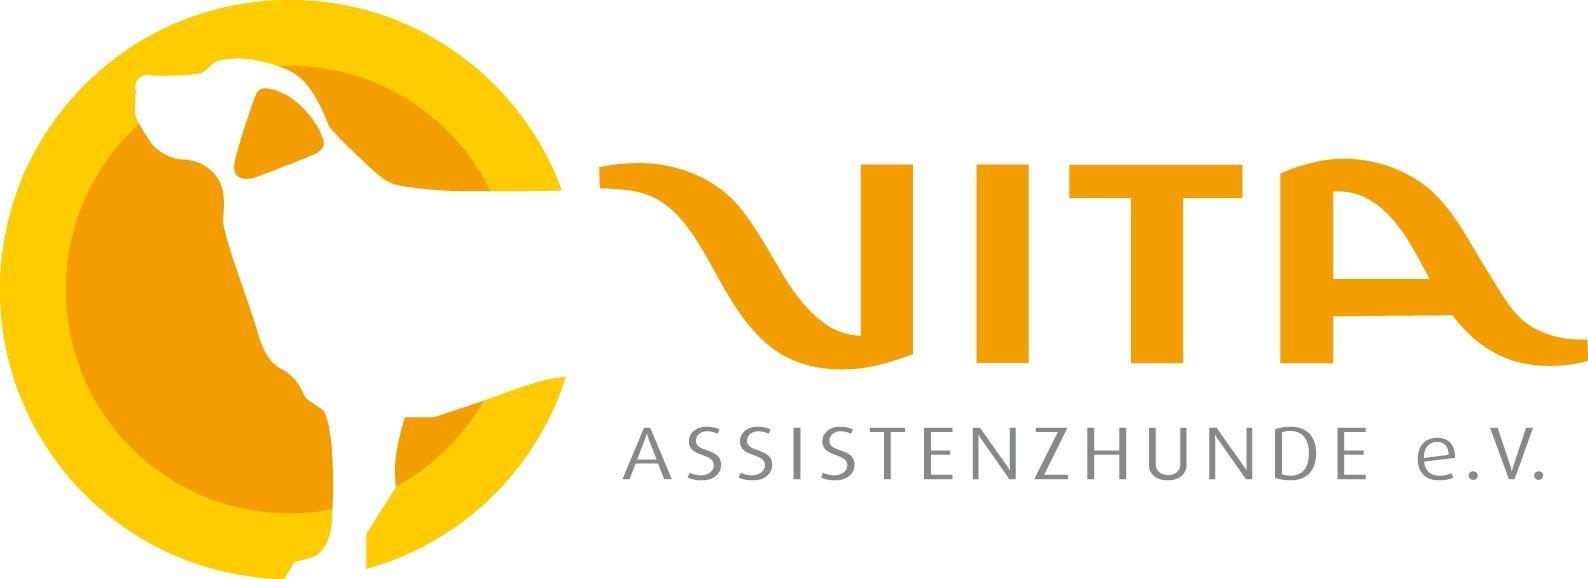 Vita Logo - File:VITA logo 4c.jpg - Wikimedia Commons